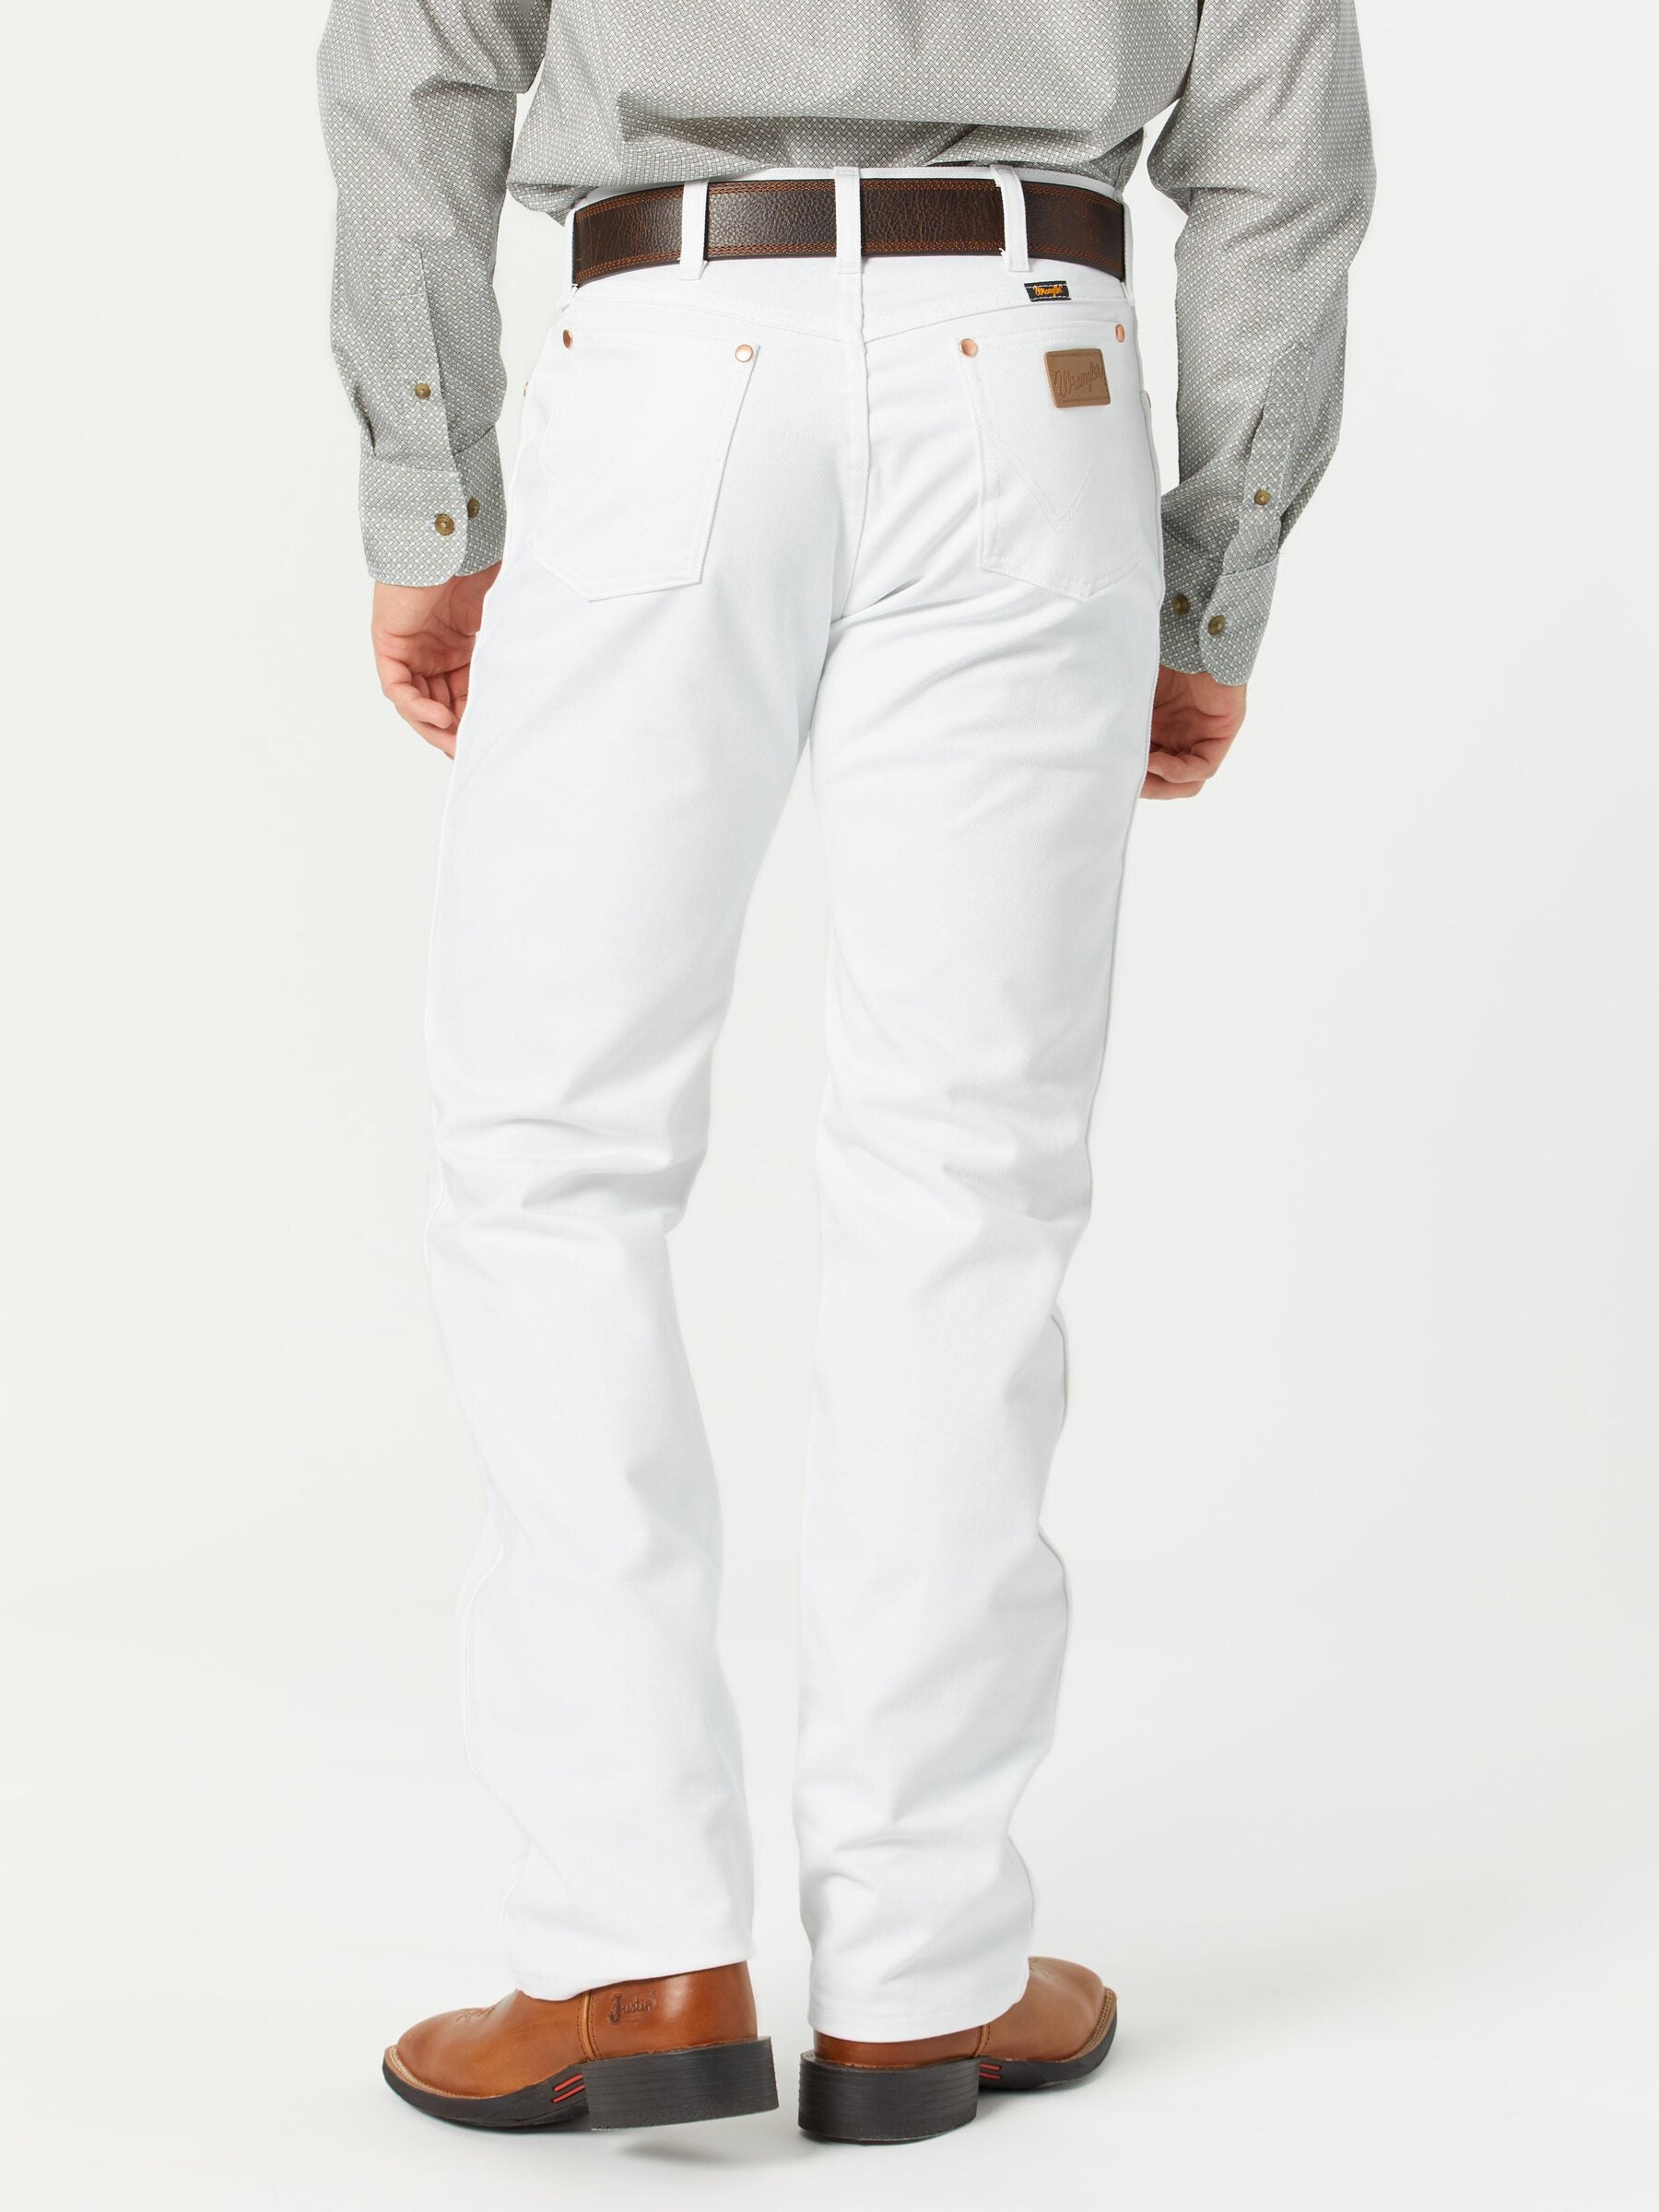 Wrangler 13MWZ 4H & FFA Men's White Denim Jeans - Riding Warehouse